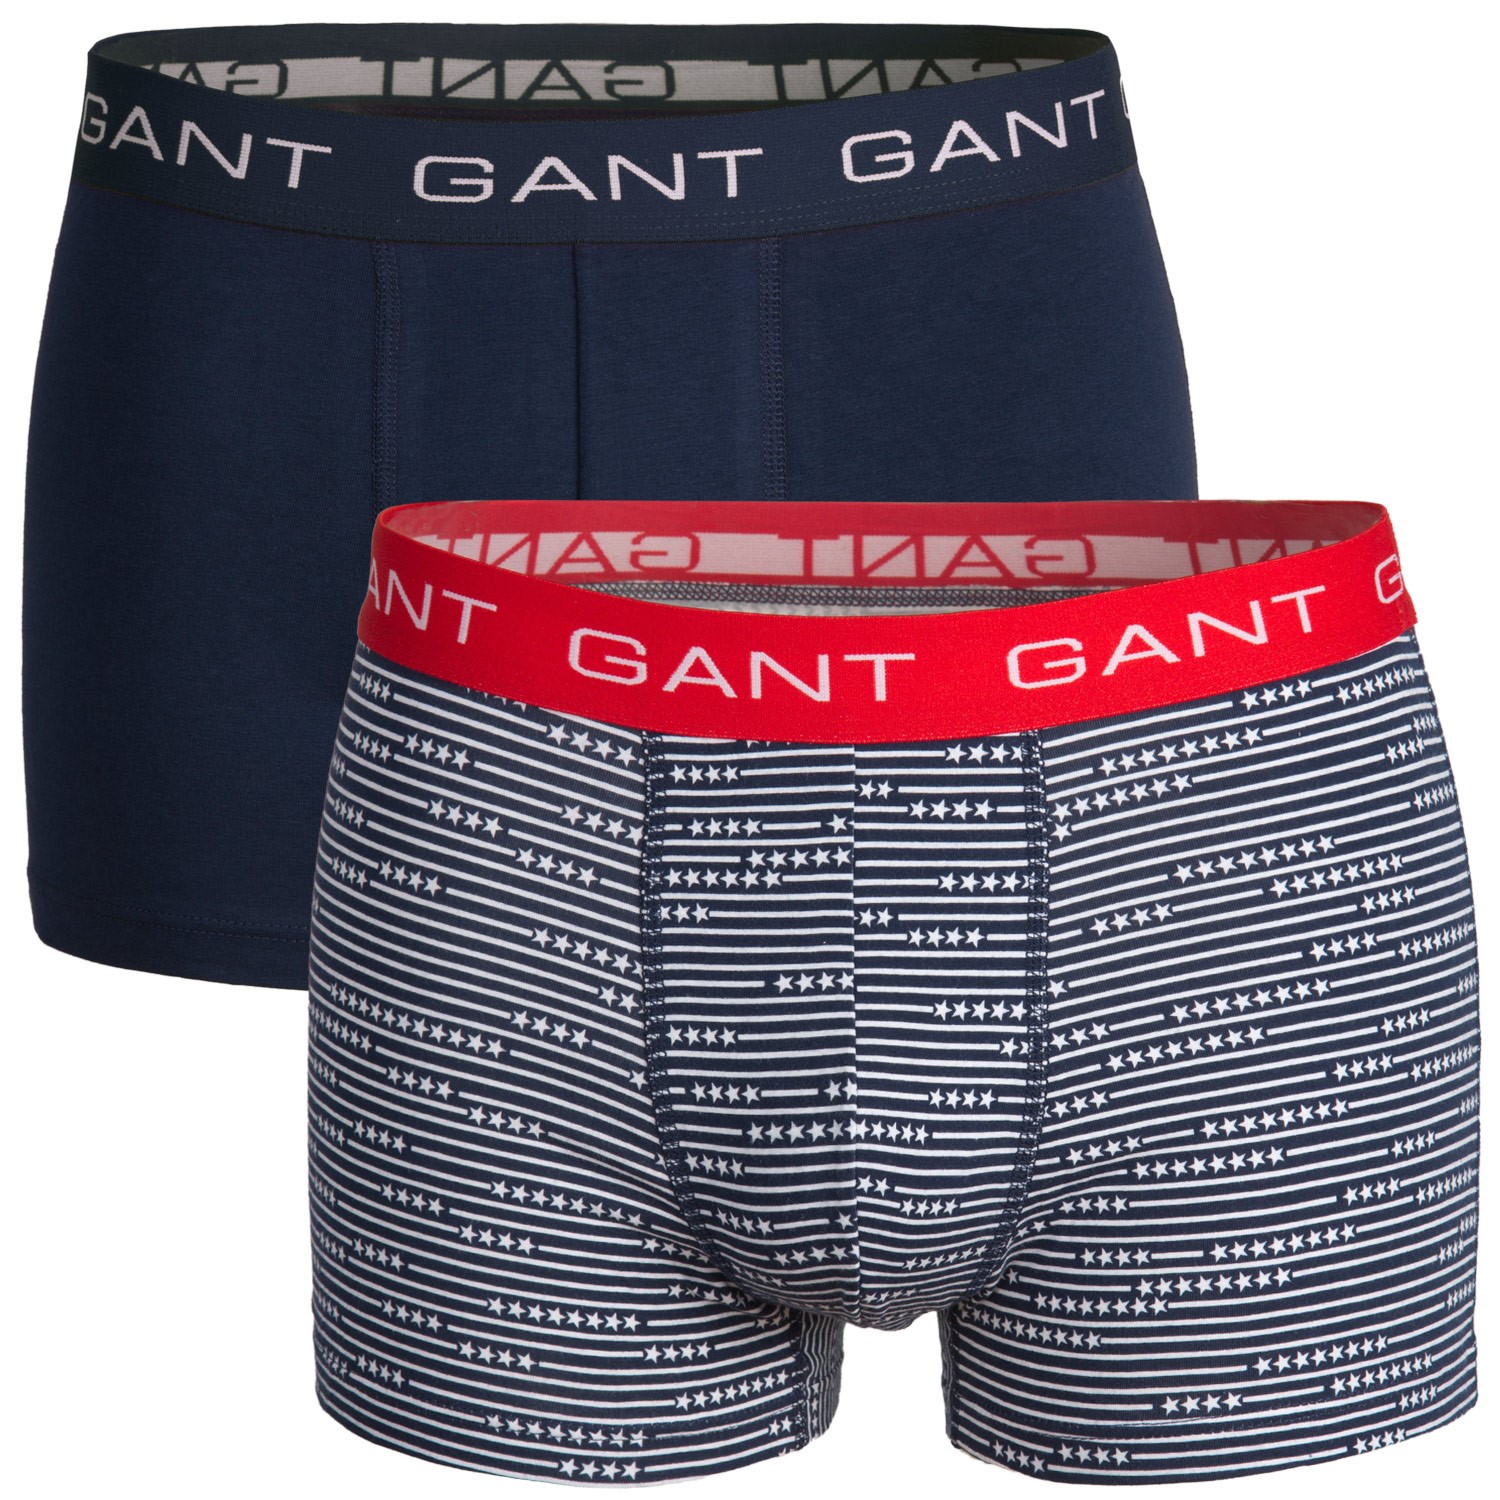 Gant Essential CS Trunk Stars and Stripes